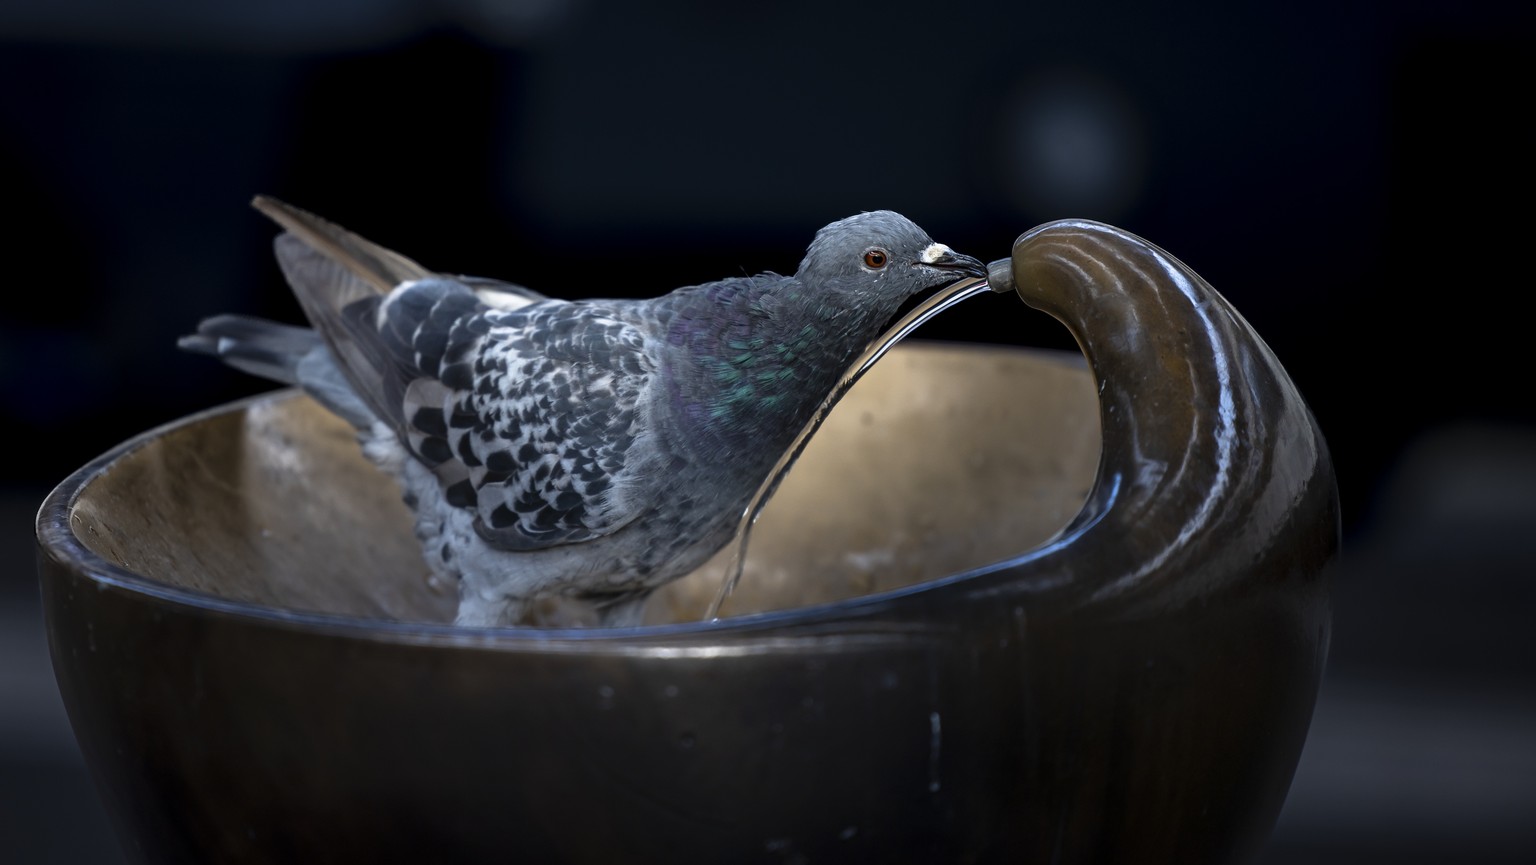 A pigeon pecks water from a fountain at Zurich main station, on Thursday, December 8, 2022 in Zurich, Switzerland. (KEYSTONE/Michael Buholzer)